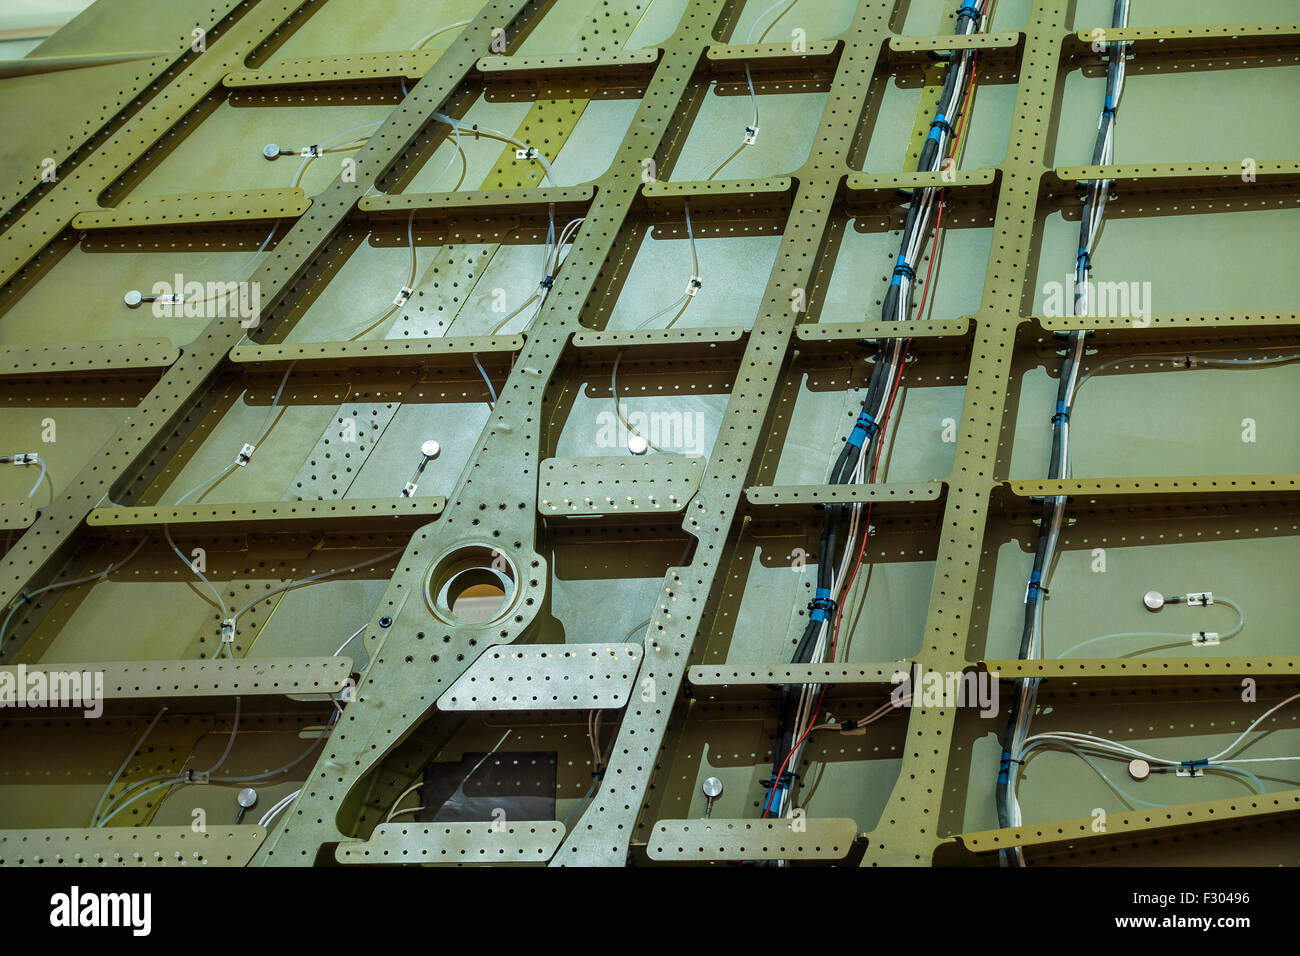 Pinna caudale dettaglio interno Bloodhound SSC sul display Canary Wharf London 25 Settembre 2015 Foto Stock